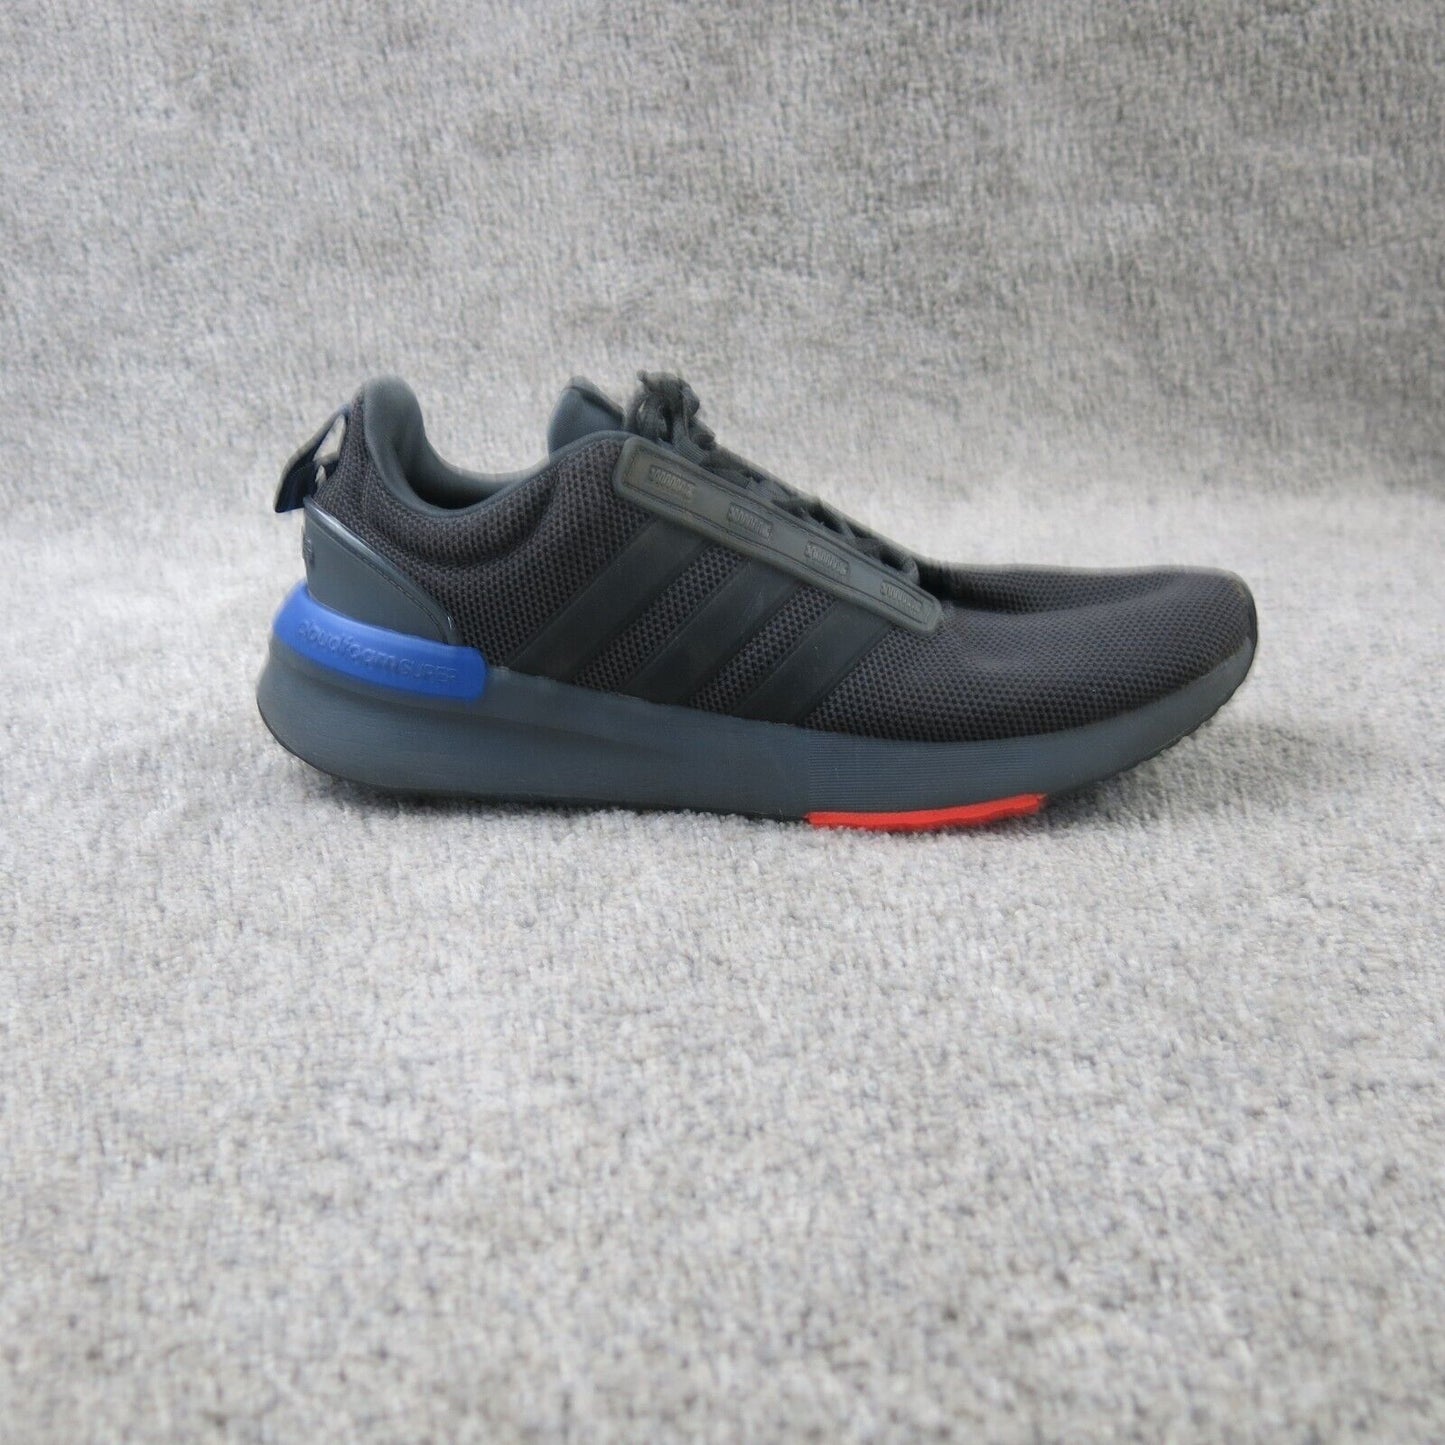 Adidas Men Cosmic 2SL Cloudfoam Shoe PWI 001001 Sneaker Low Top Black Size US 10